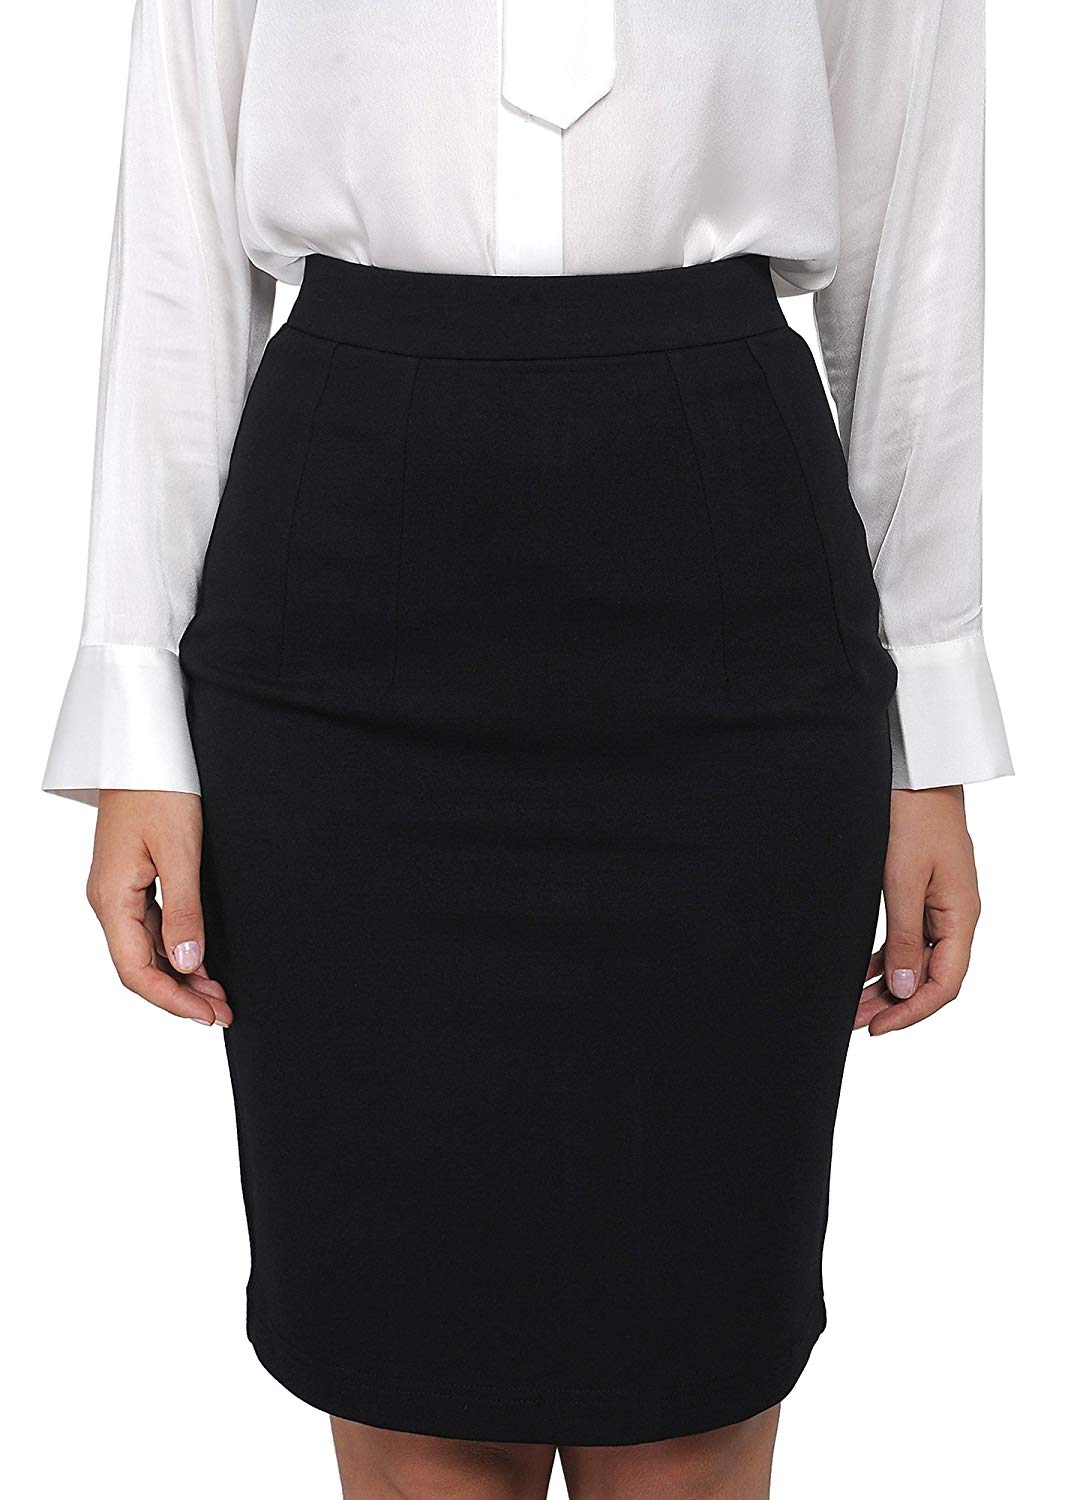 Marycrafts Women's Work Office Business Pencil Skirt XS, Black, Size X ...